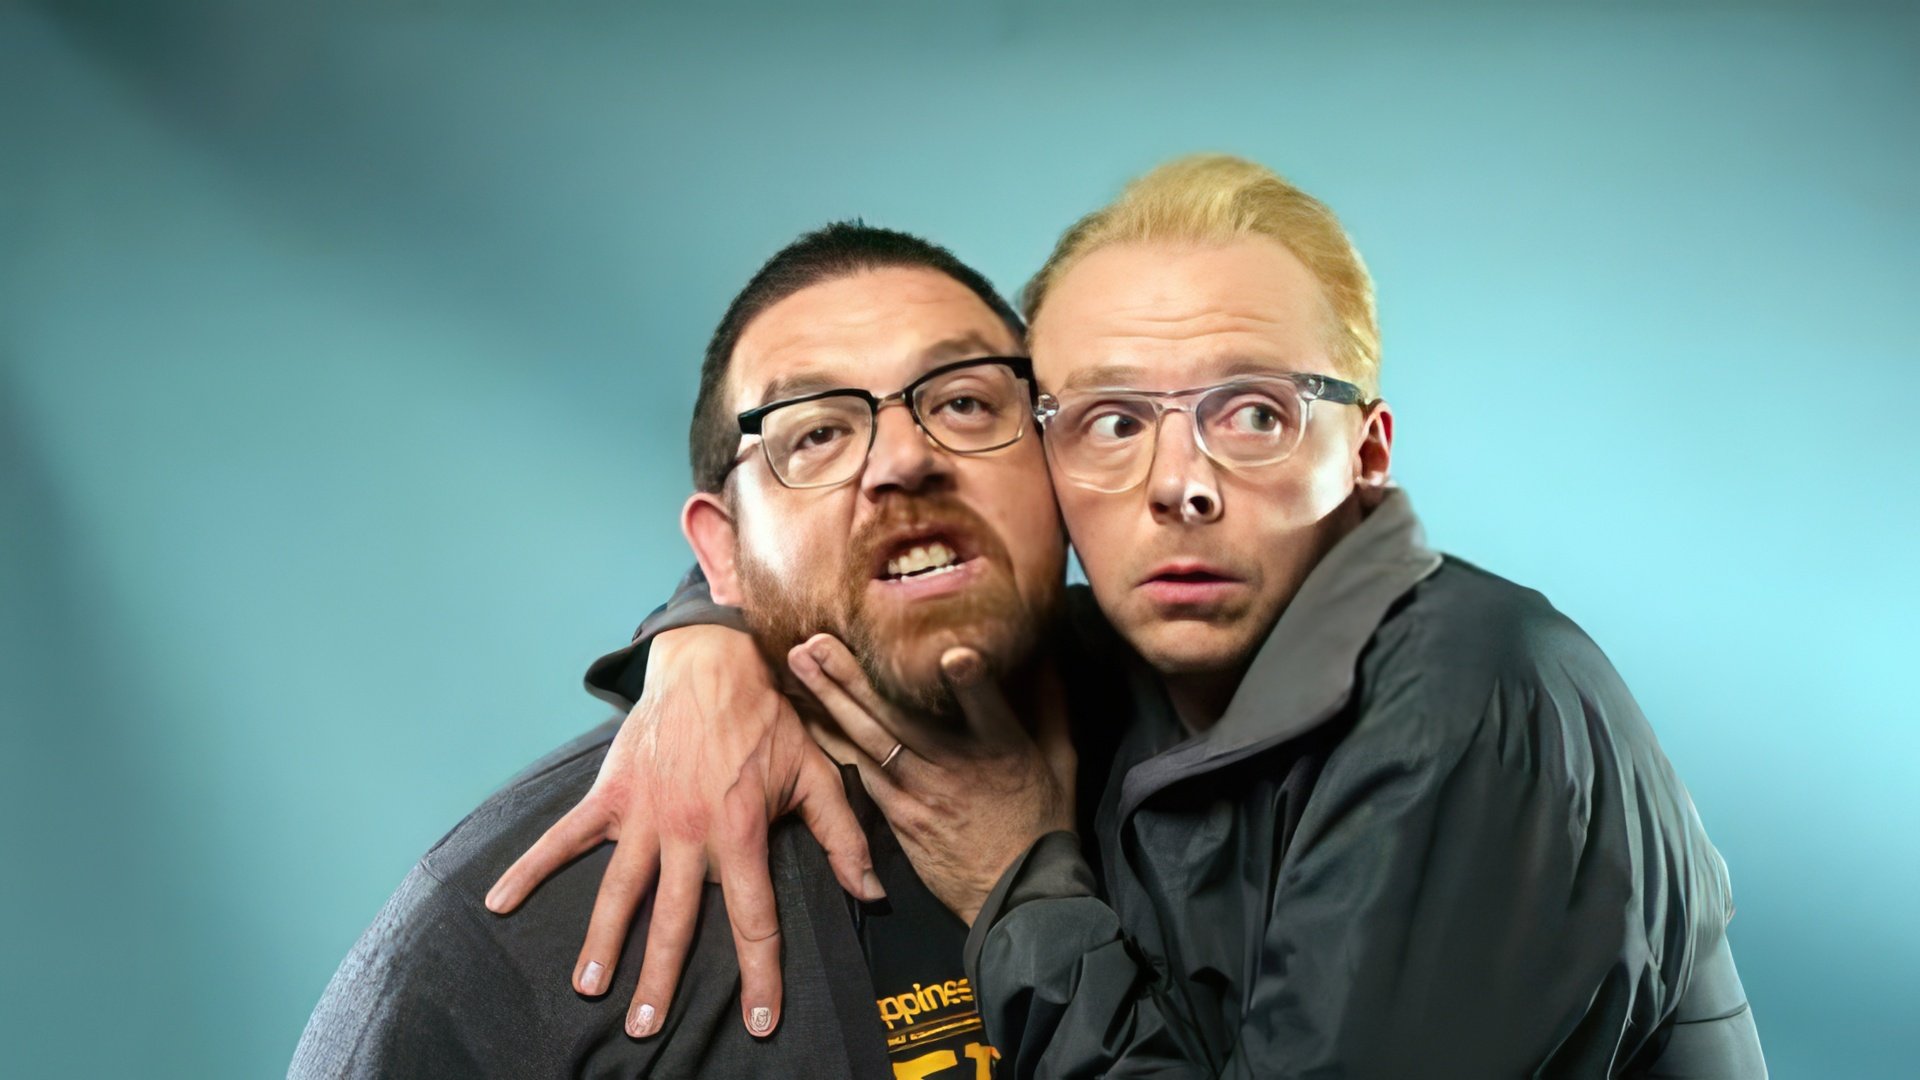 Simon Pegg and Nick Frost – a unique creative duo